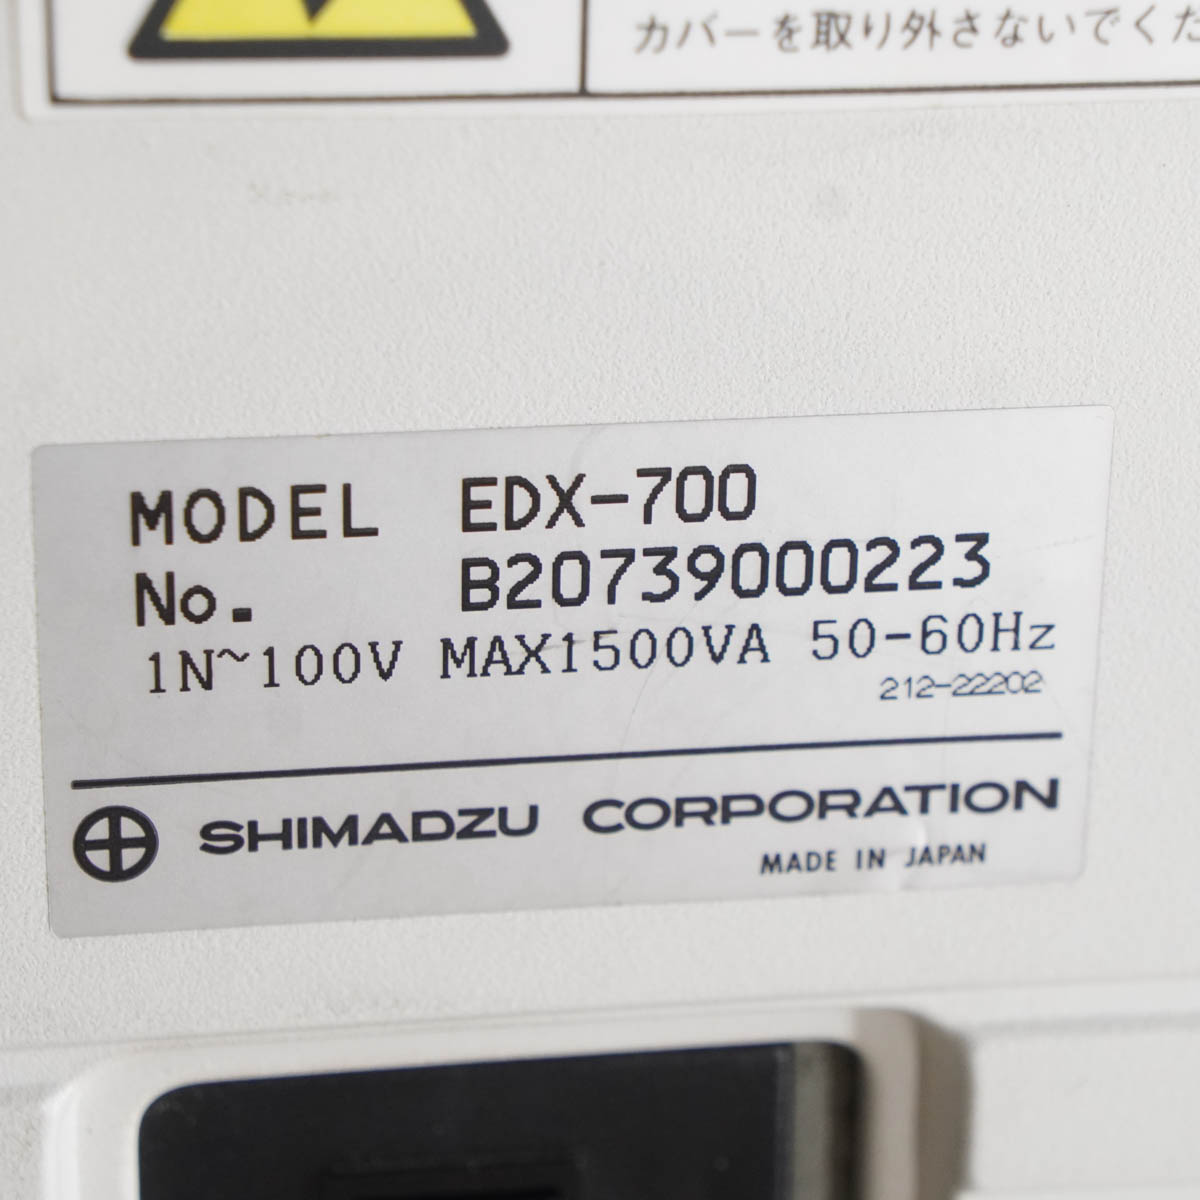 JB]USED 現状販売 SHIMADZU EDX-700 Rayny ENERGY DISPERSIVE X-RAY SPECTROMETER  エネルギー分散形蛍光X線分析装置 取...[ST04400-0002] 通販